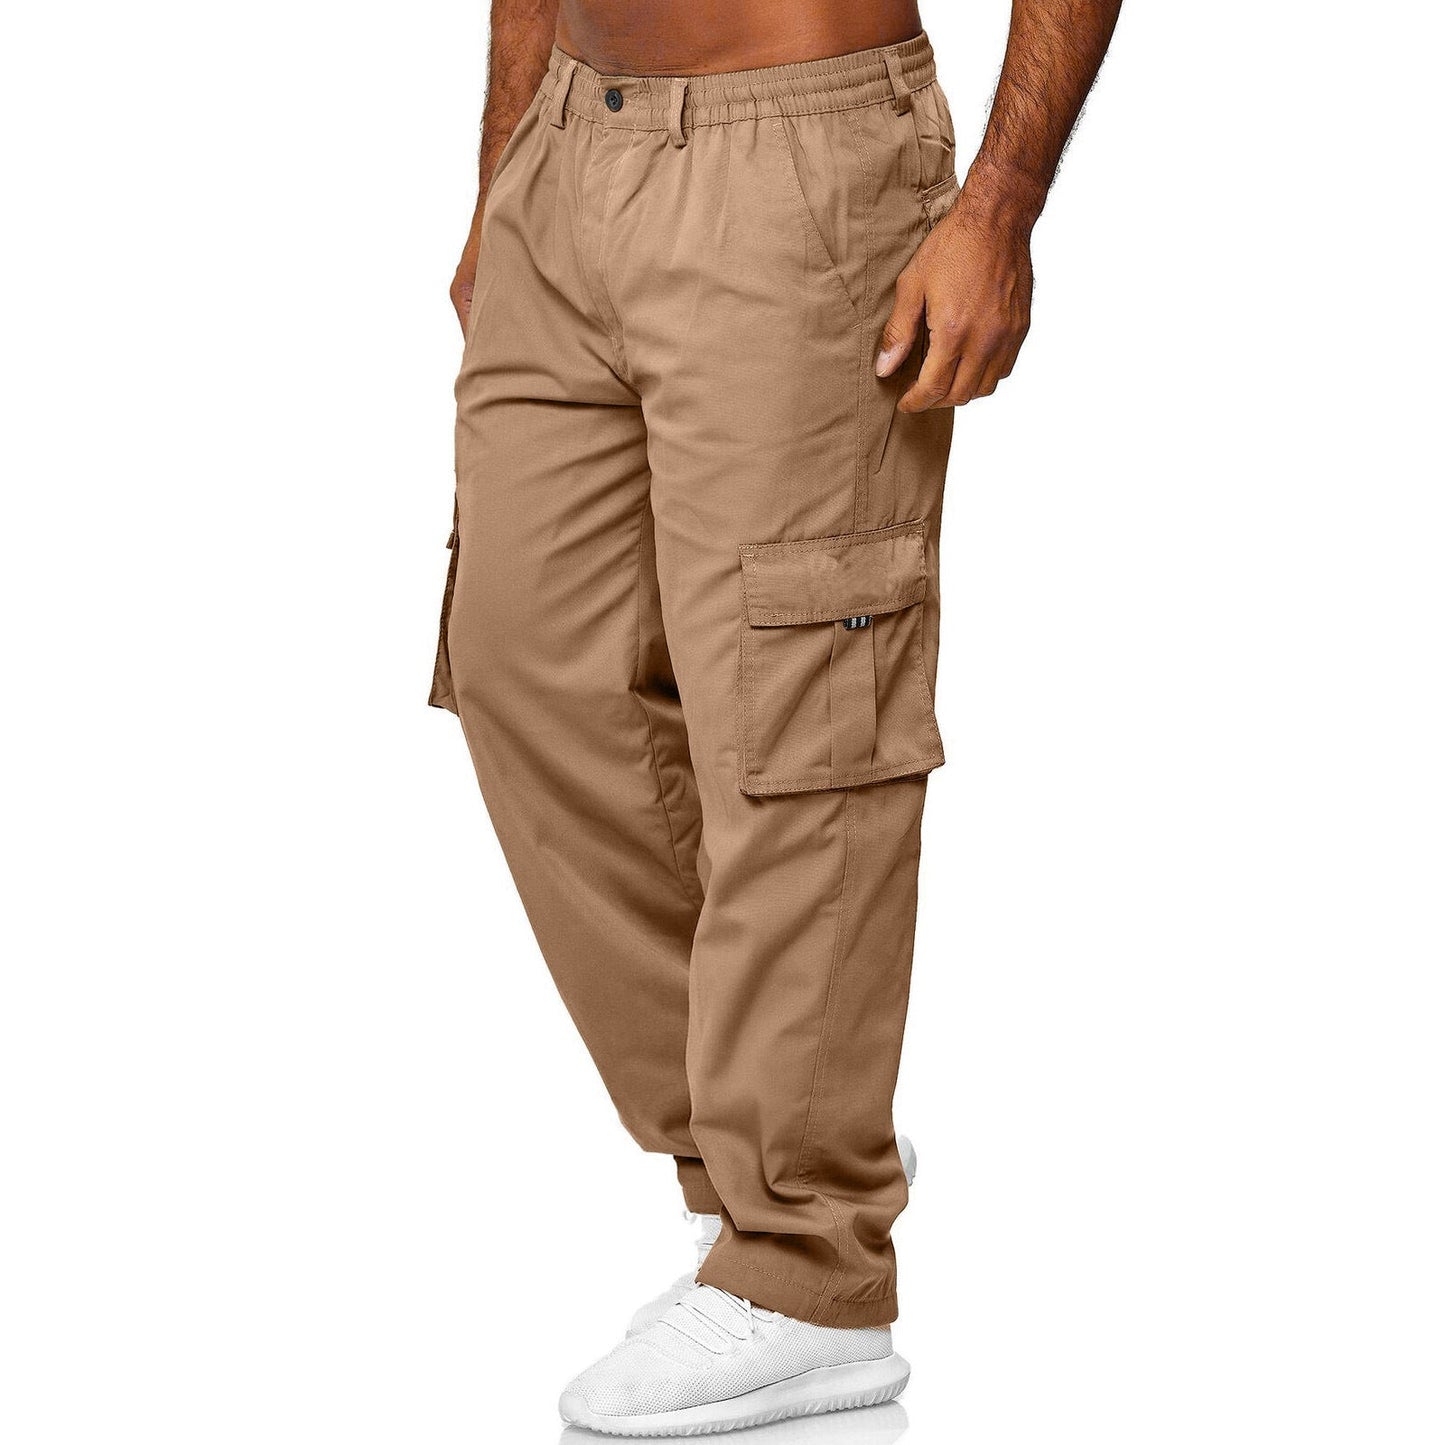 Casual Pockets Men's Outdoor Pants-Pants-Khaki-S-Free Shipping Leatheretro